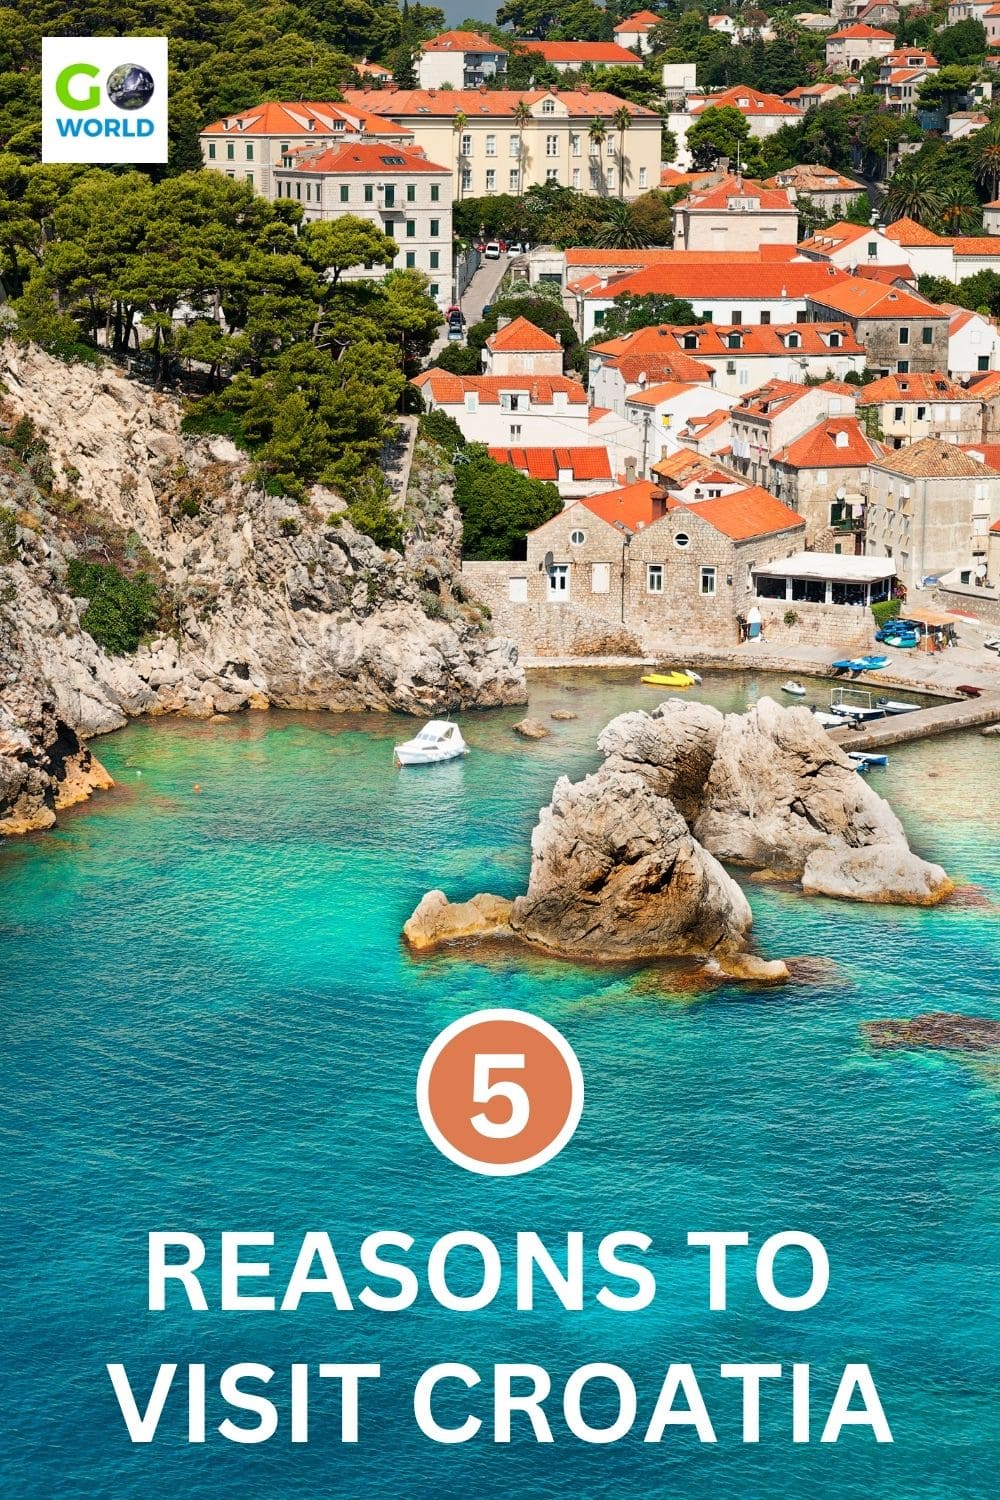 The Croatian Coast, Adriatic Sea, turbulent history and incredible people are just some of the reasons to visit Croatia. #Croatia #Dubrovnik #reasonstovisitcroatia